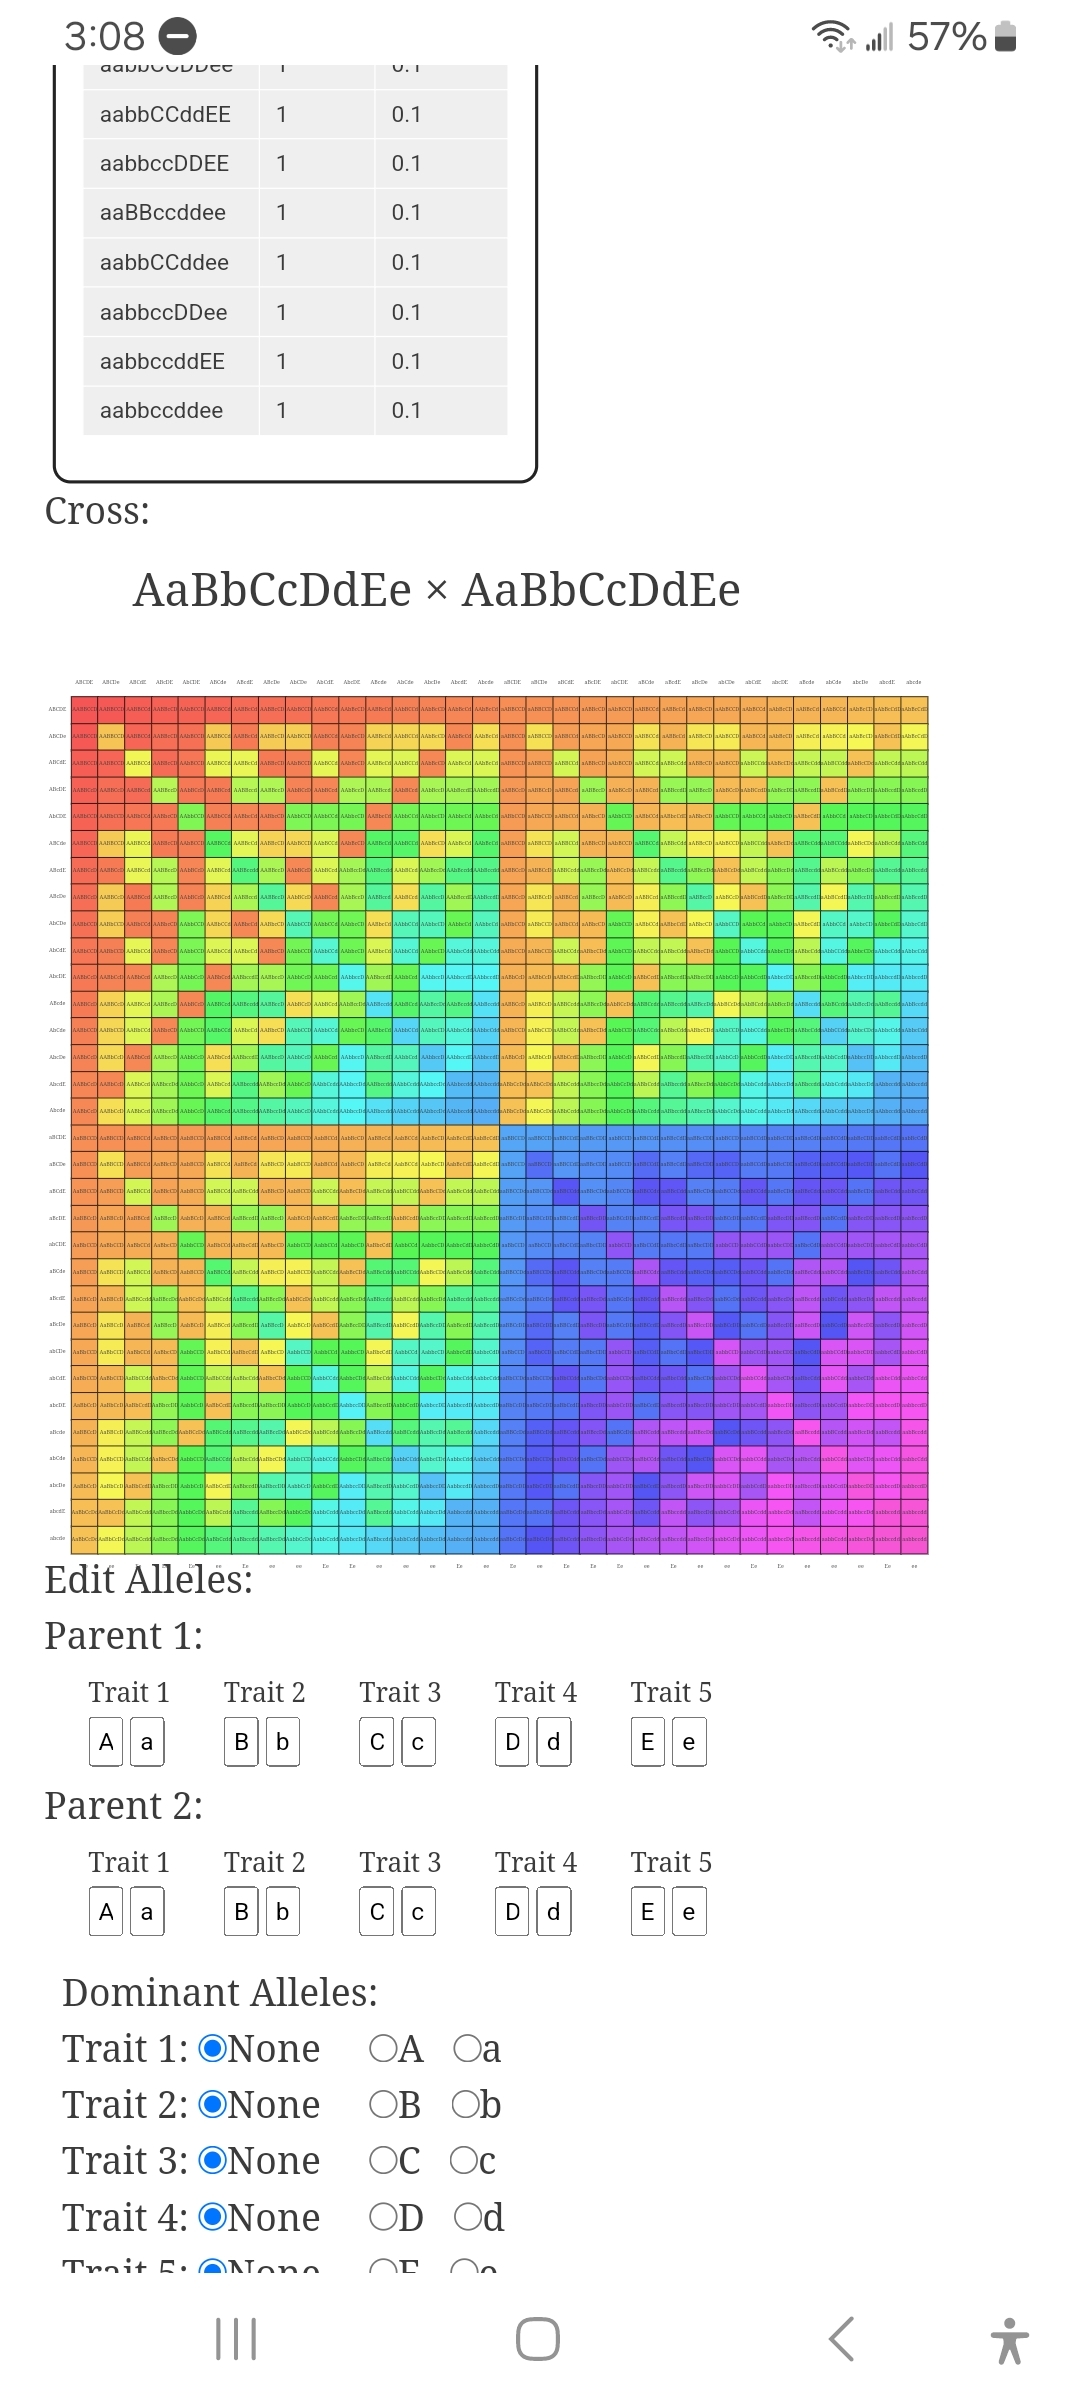 5x5 punnett square gene frequencies